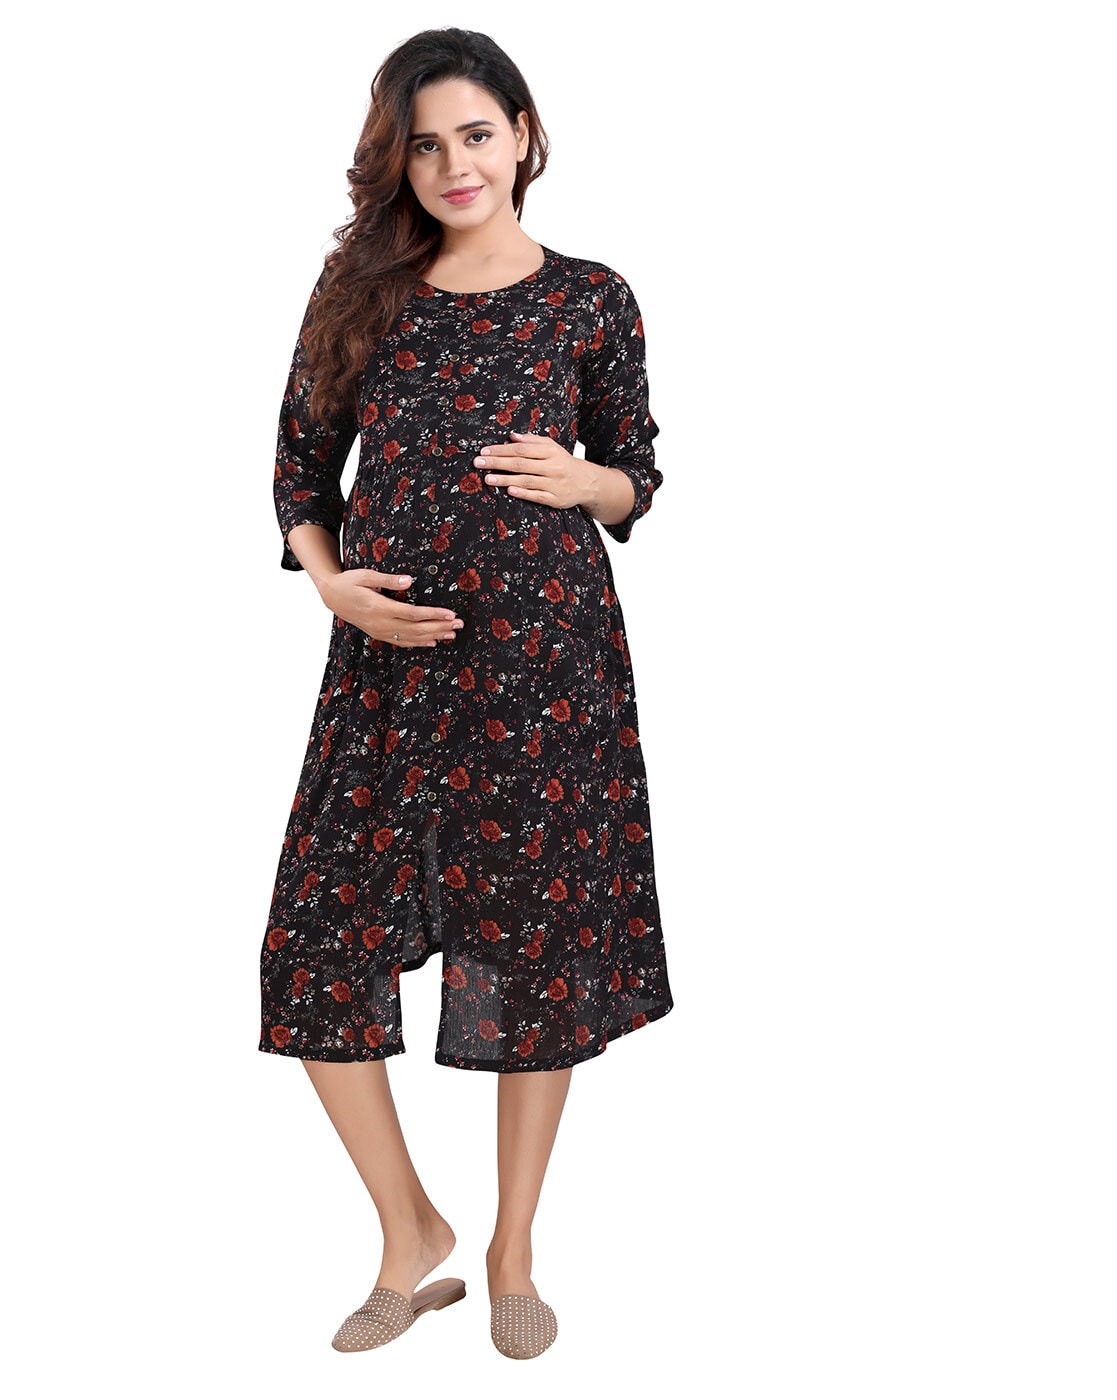 Stylish Maternity Dresses Australia | Soon Maternity